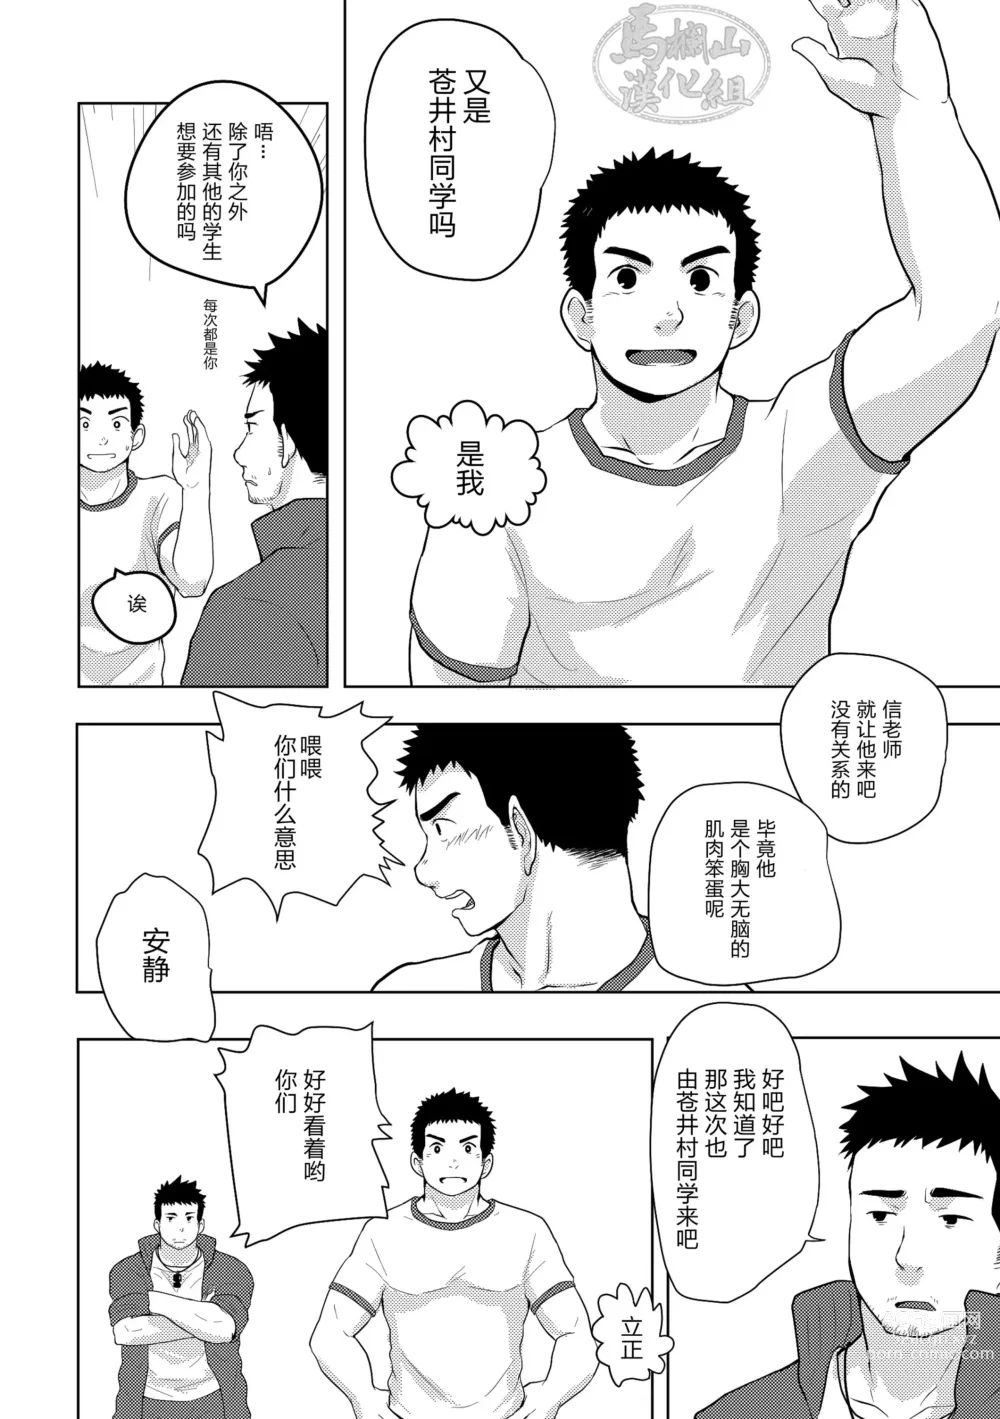 Page 5 of manga 汗だく体育